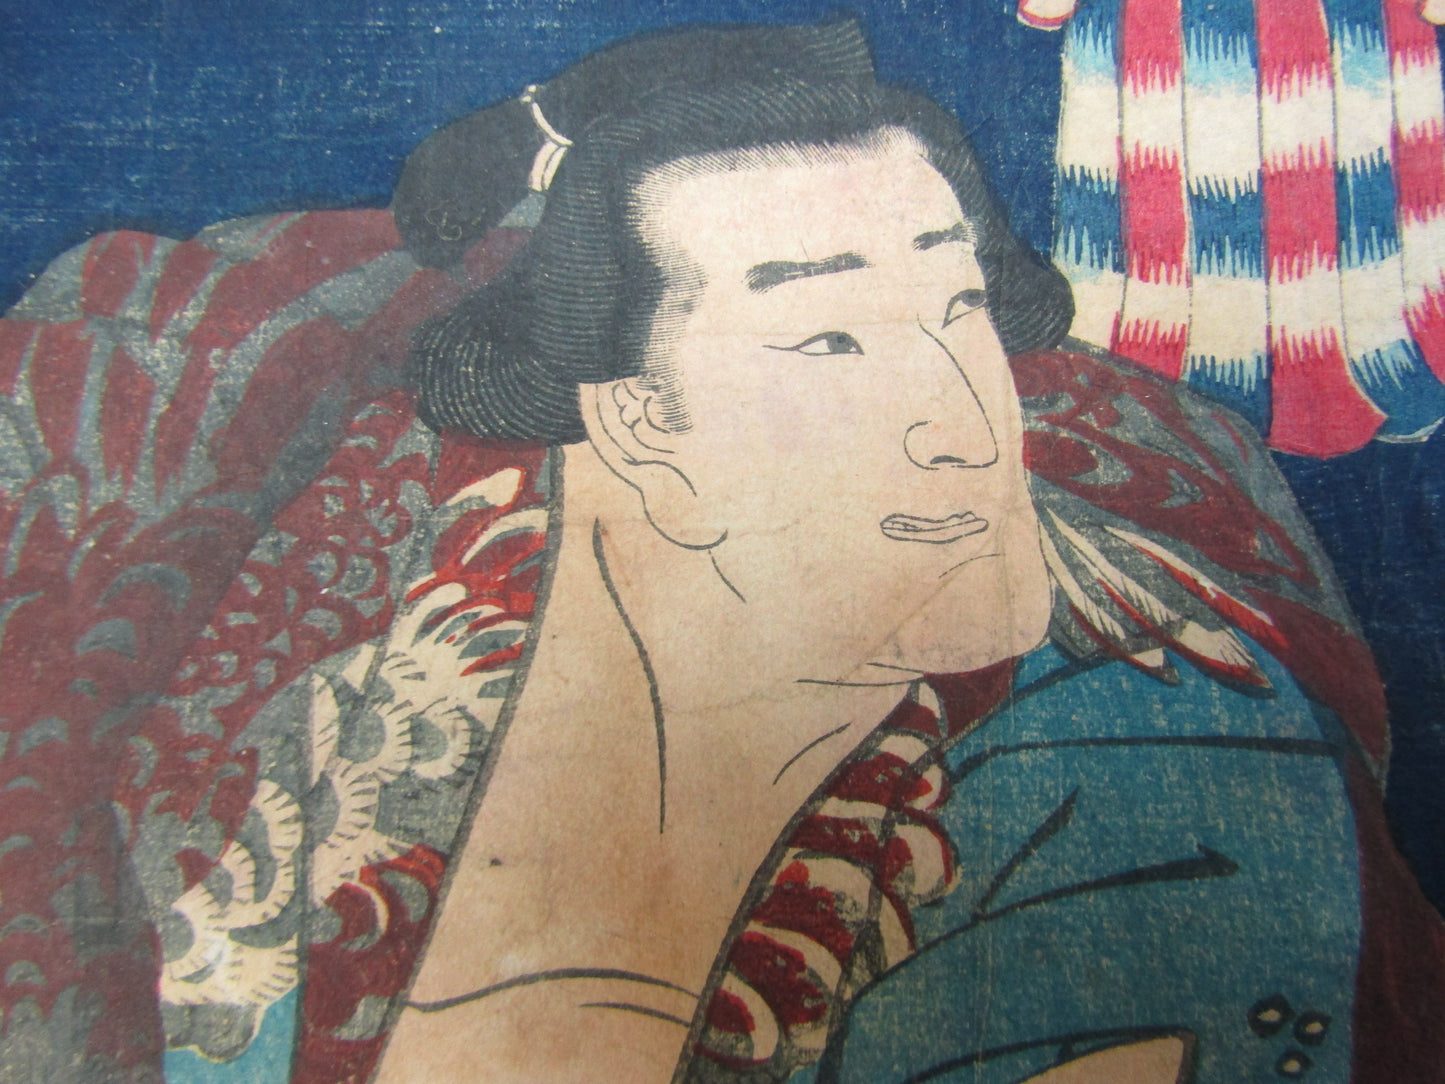 "Takamiyama Daigoroh Sumo wrestler" Ōkō Kuniteru Framed woodblock print